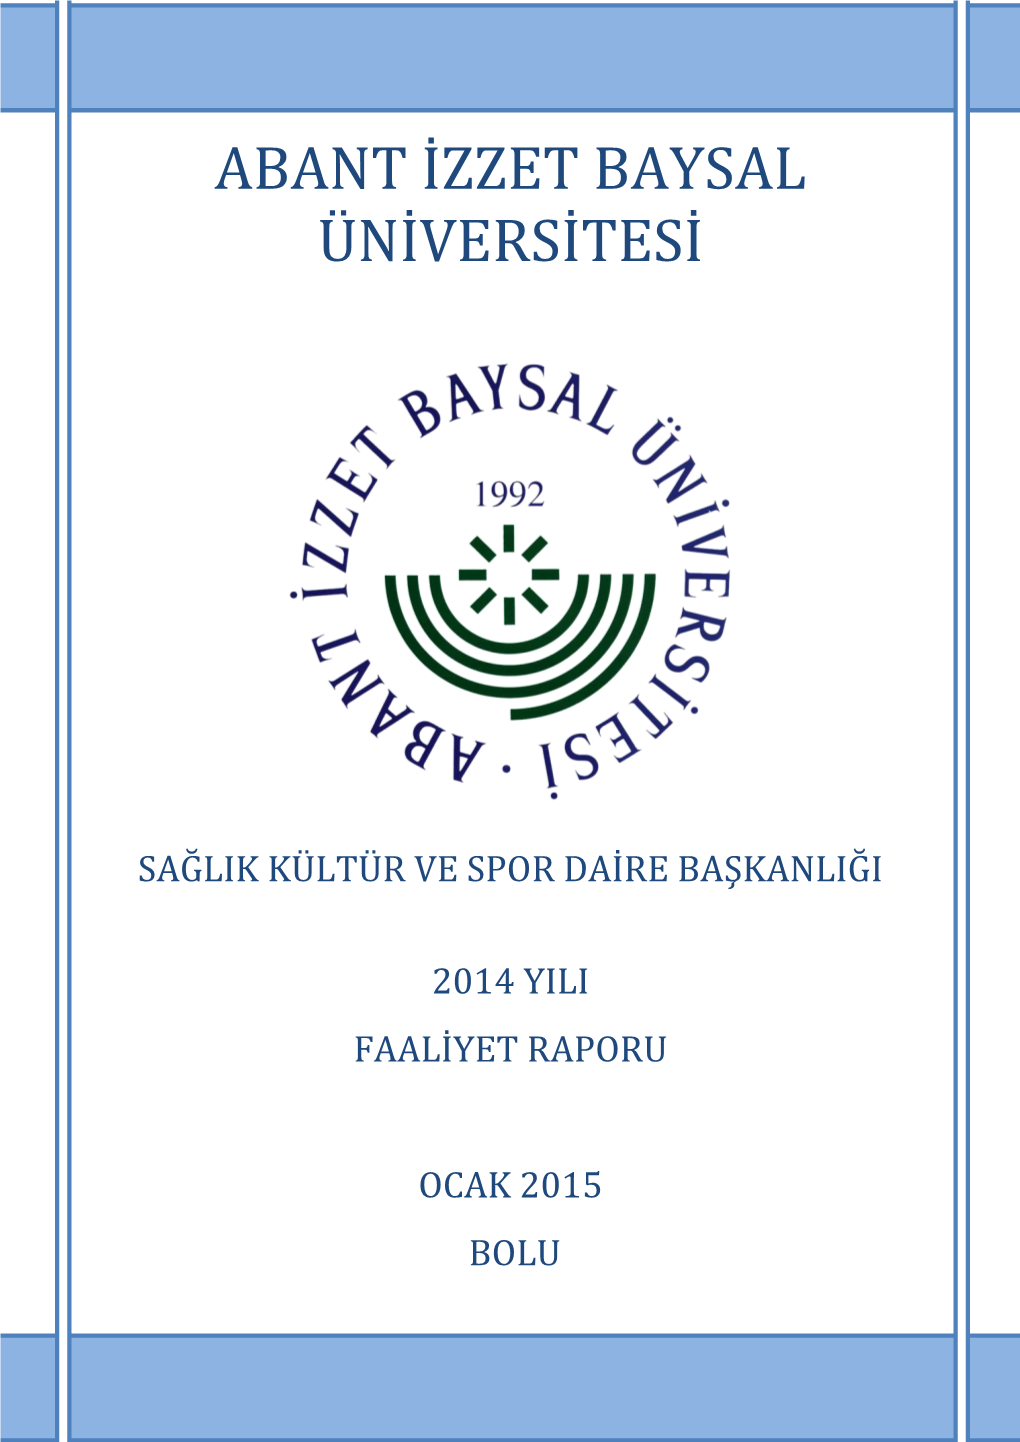 Abant Izzet Baysal Üniversitesi